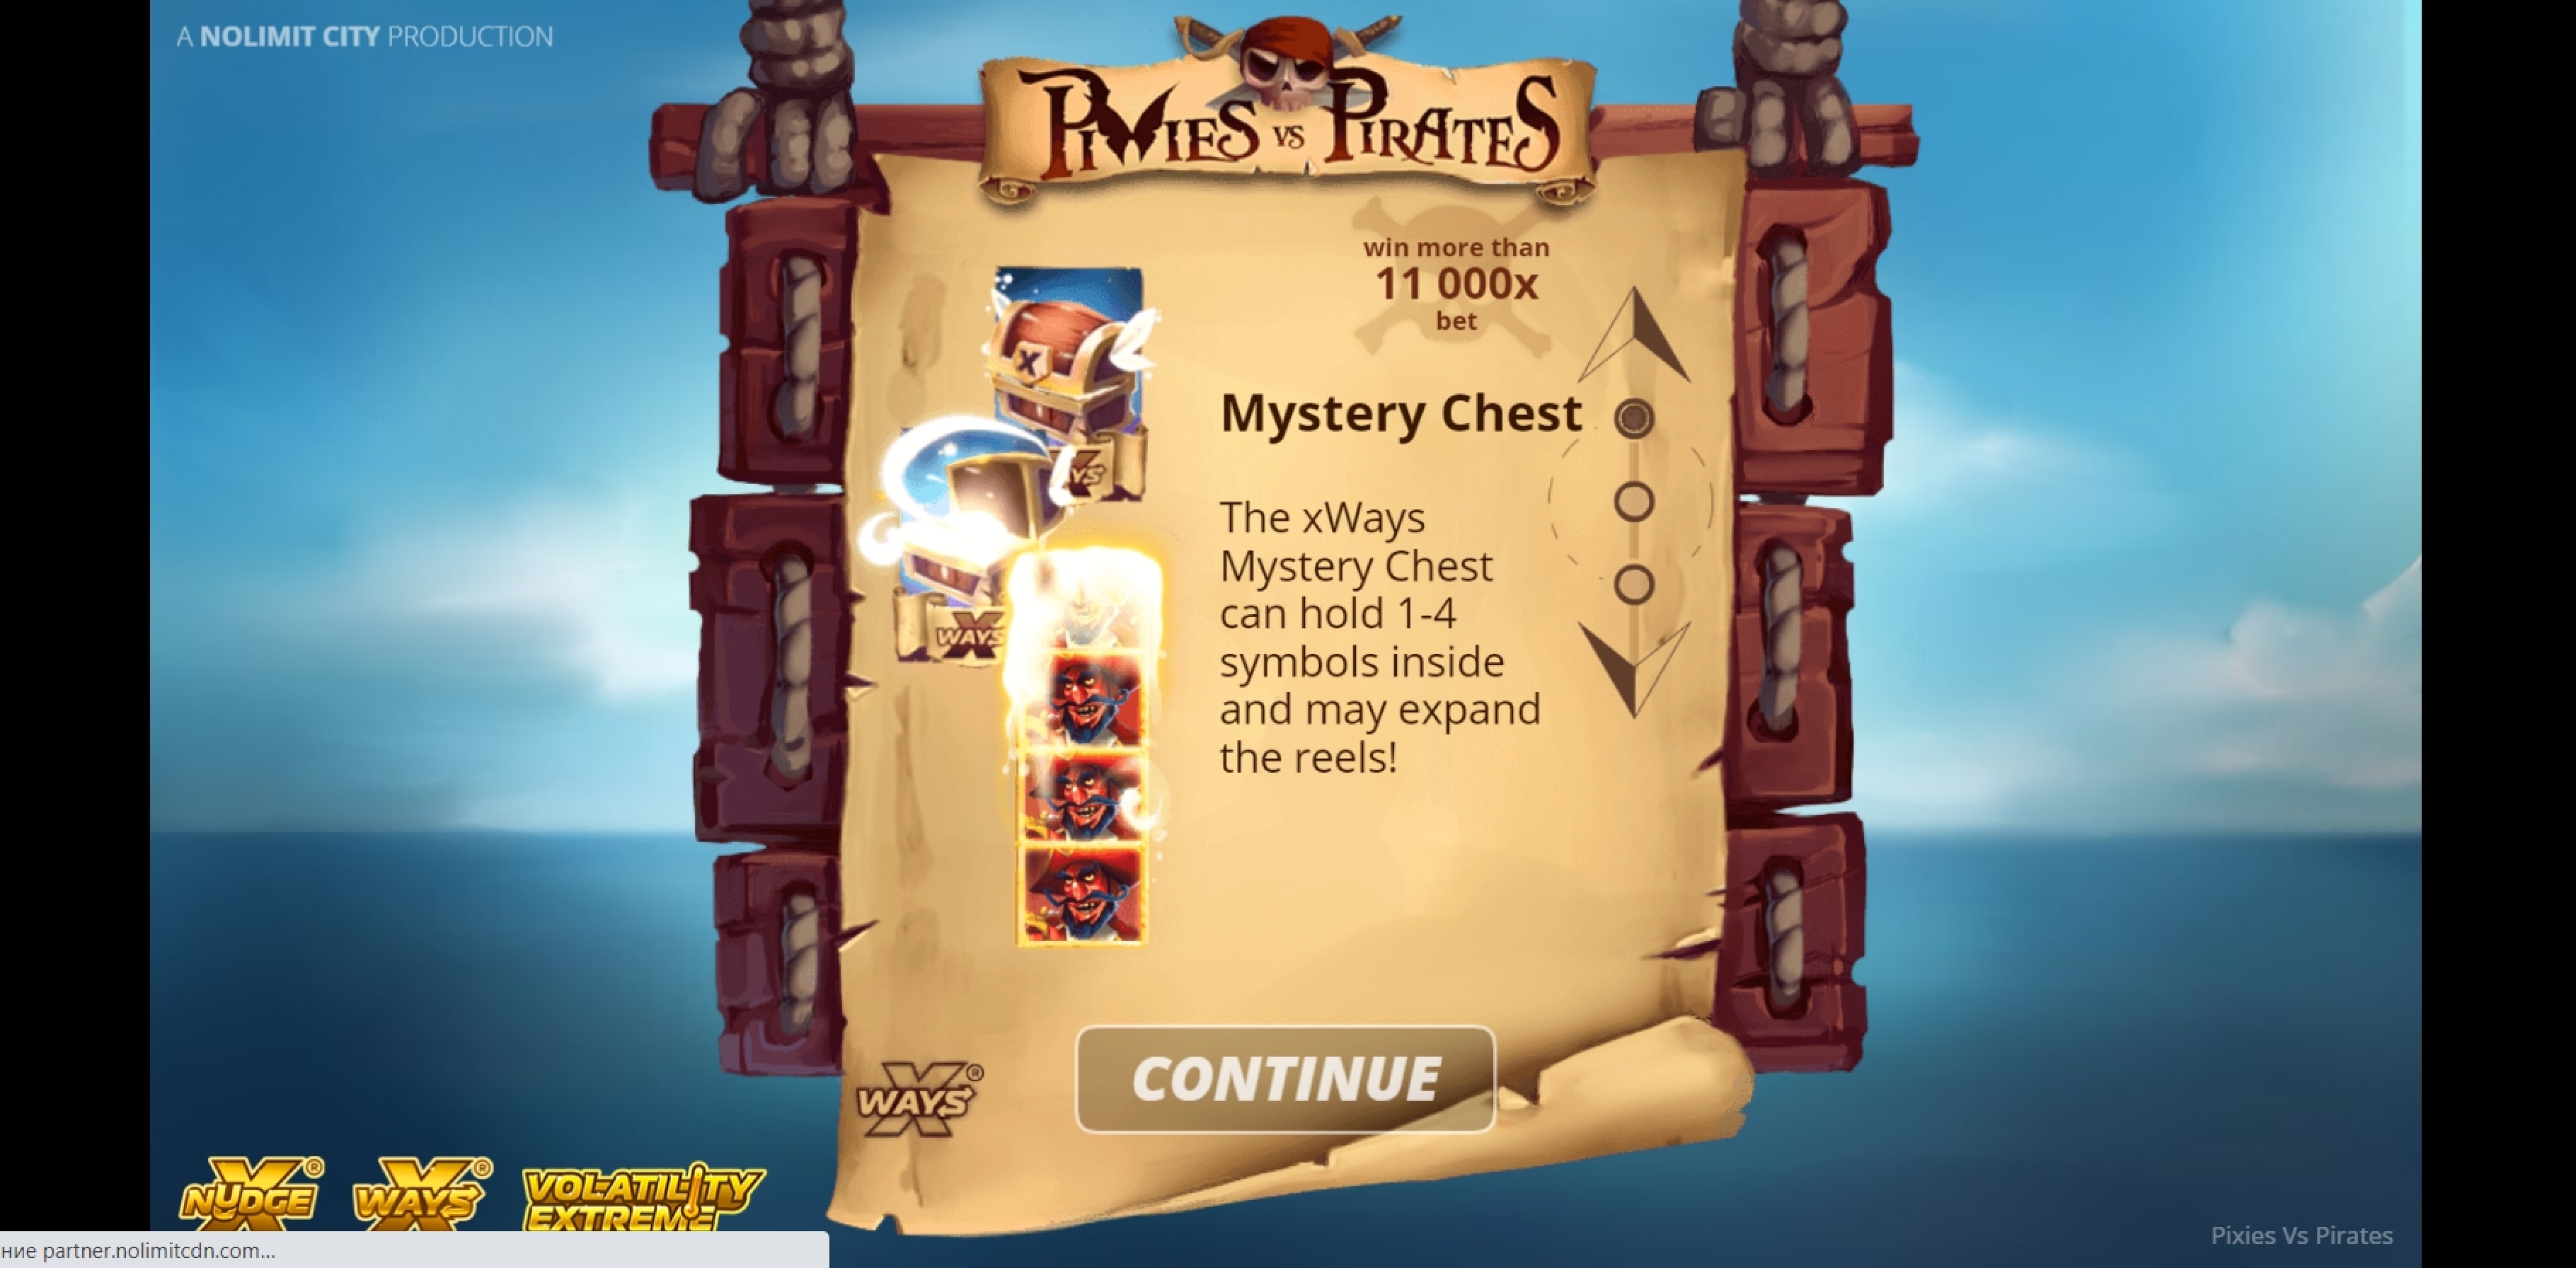 Play Pixies Vs Pirates Free Casino Slot Game by Nolimit City